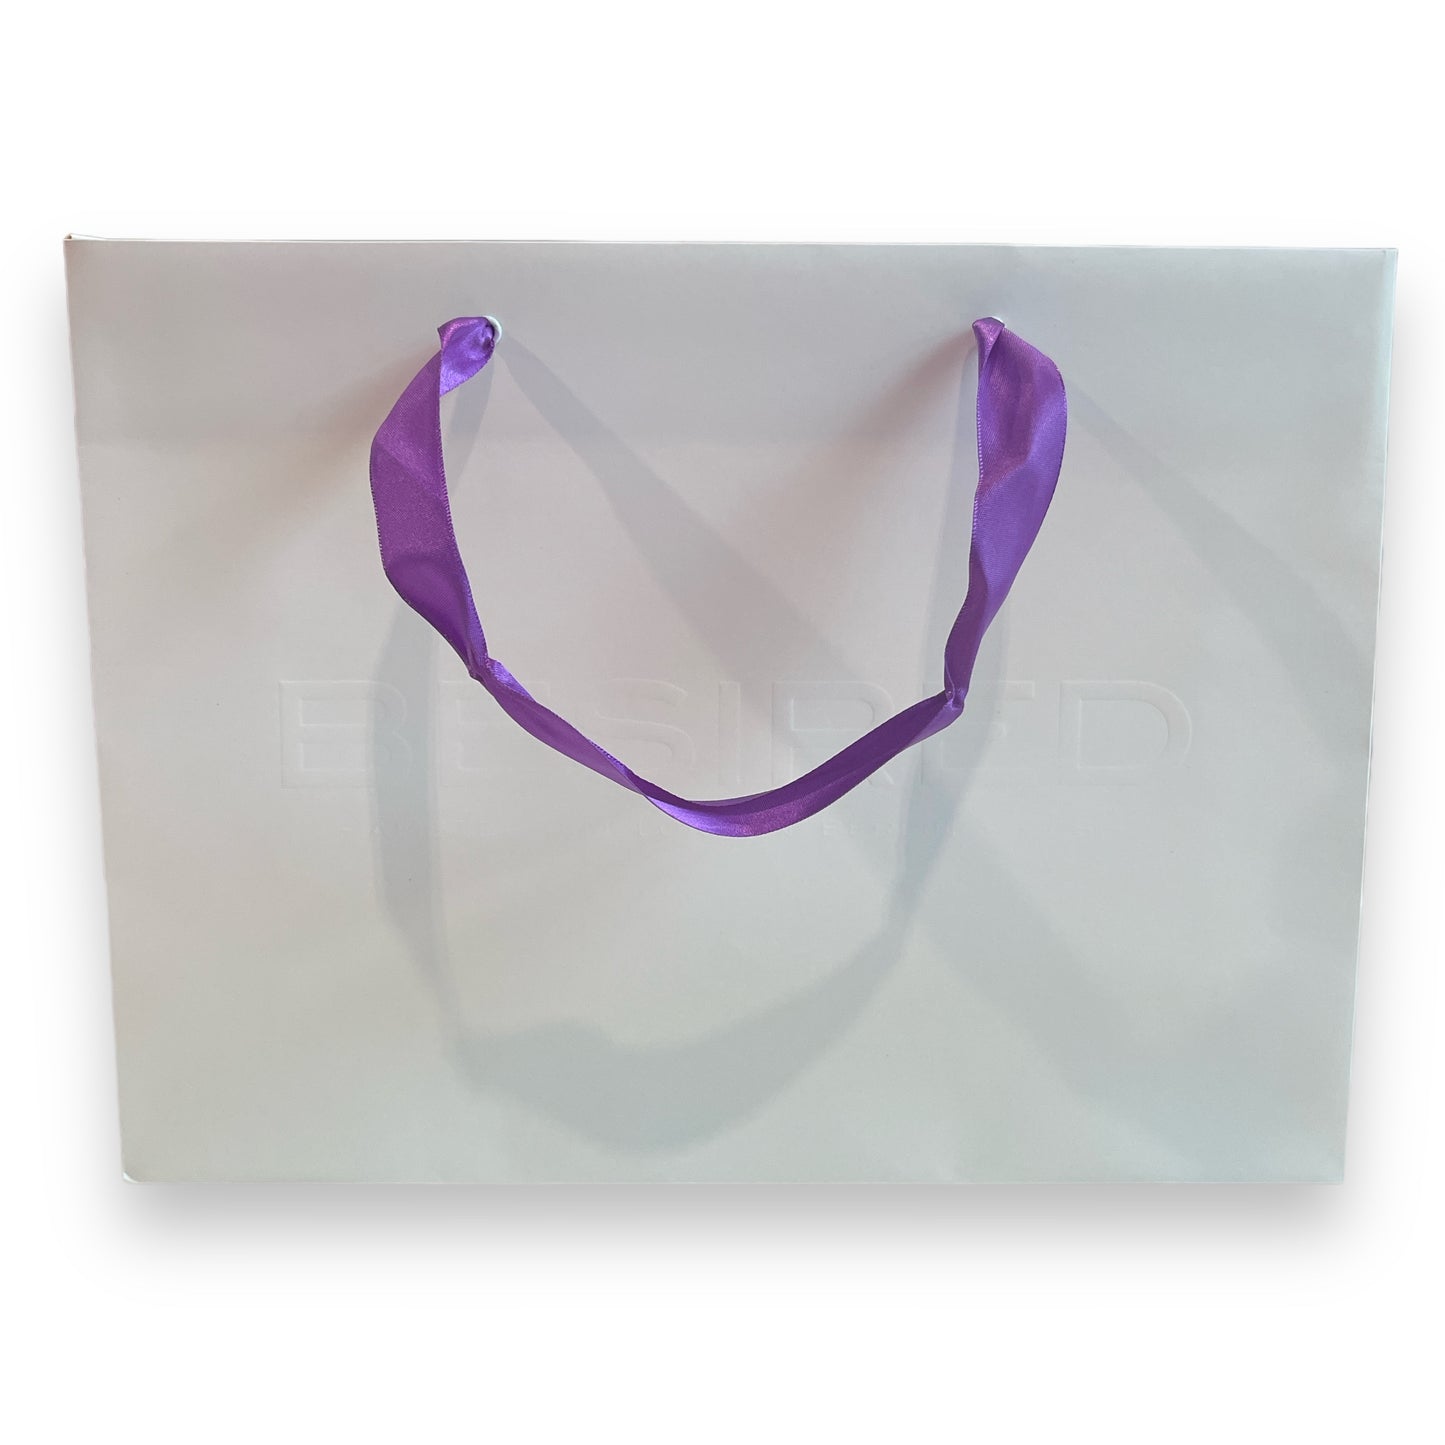 Besired - SH005 - Shopping Bag - Medium - 2 Colours - 1 Piece